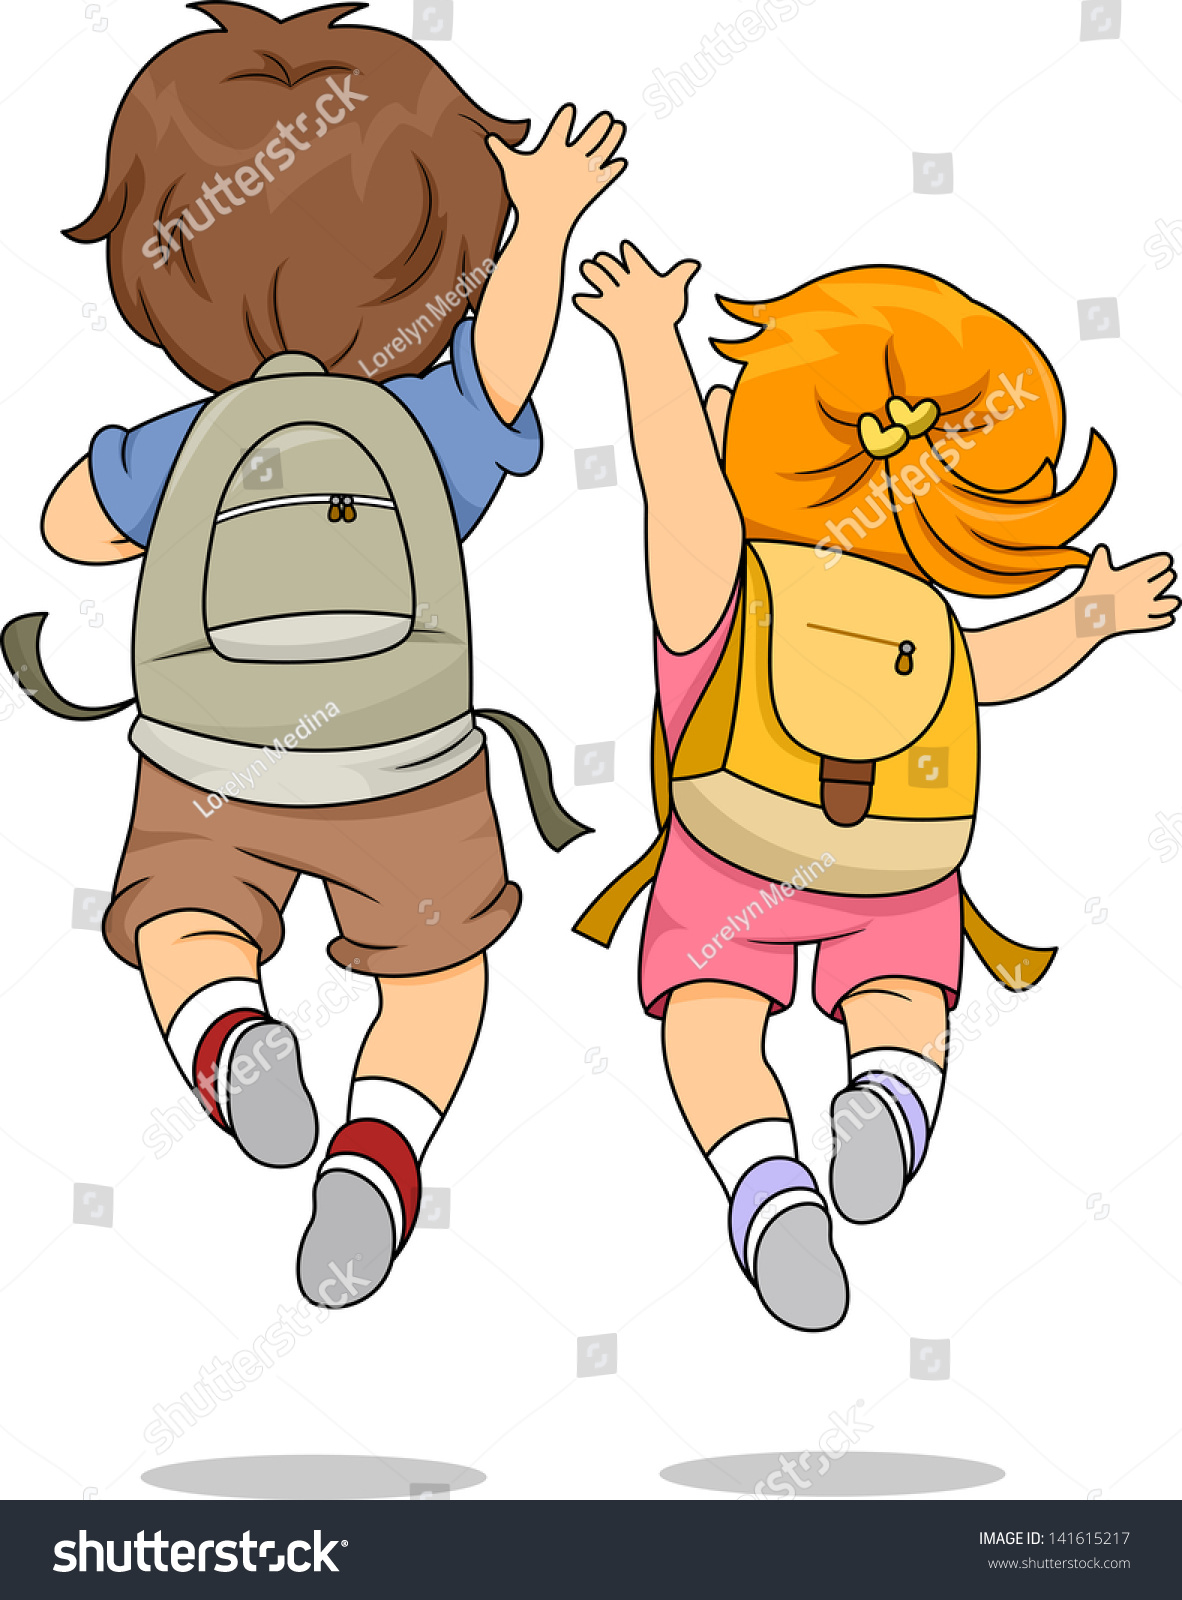 stock-vector-back-view-illustration-of-little-male-and-female-kids-wearing-backpacks-jumping-merrily-141615217.jpg (1181×1600)